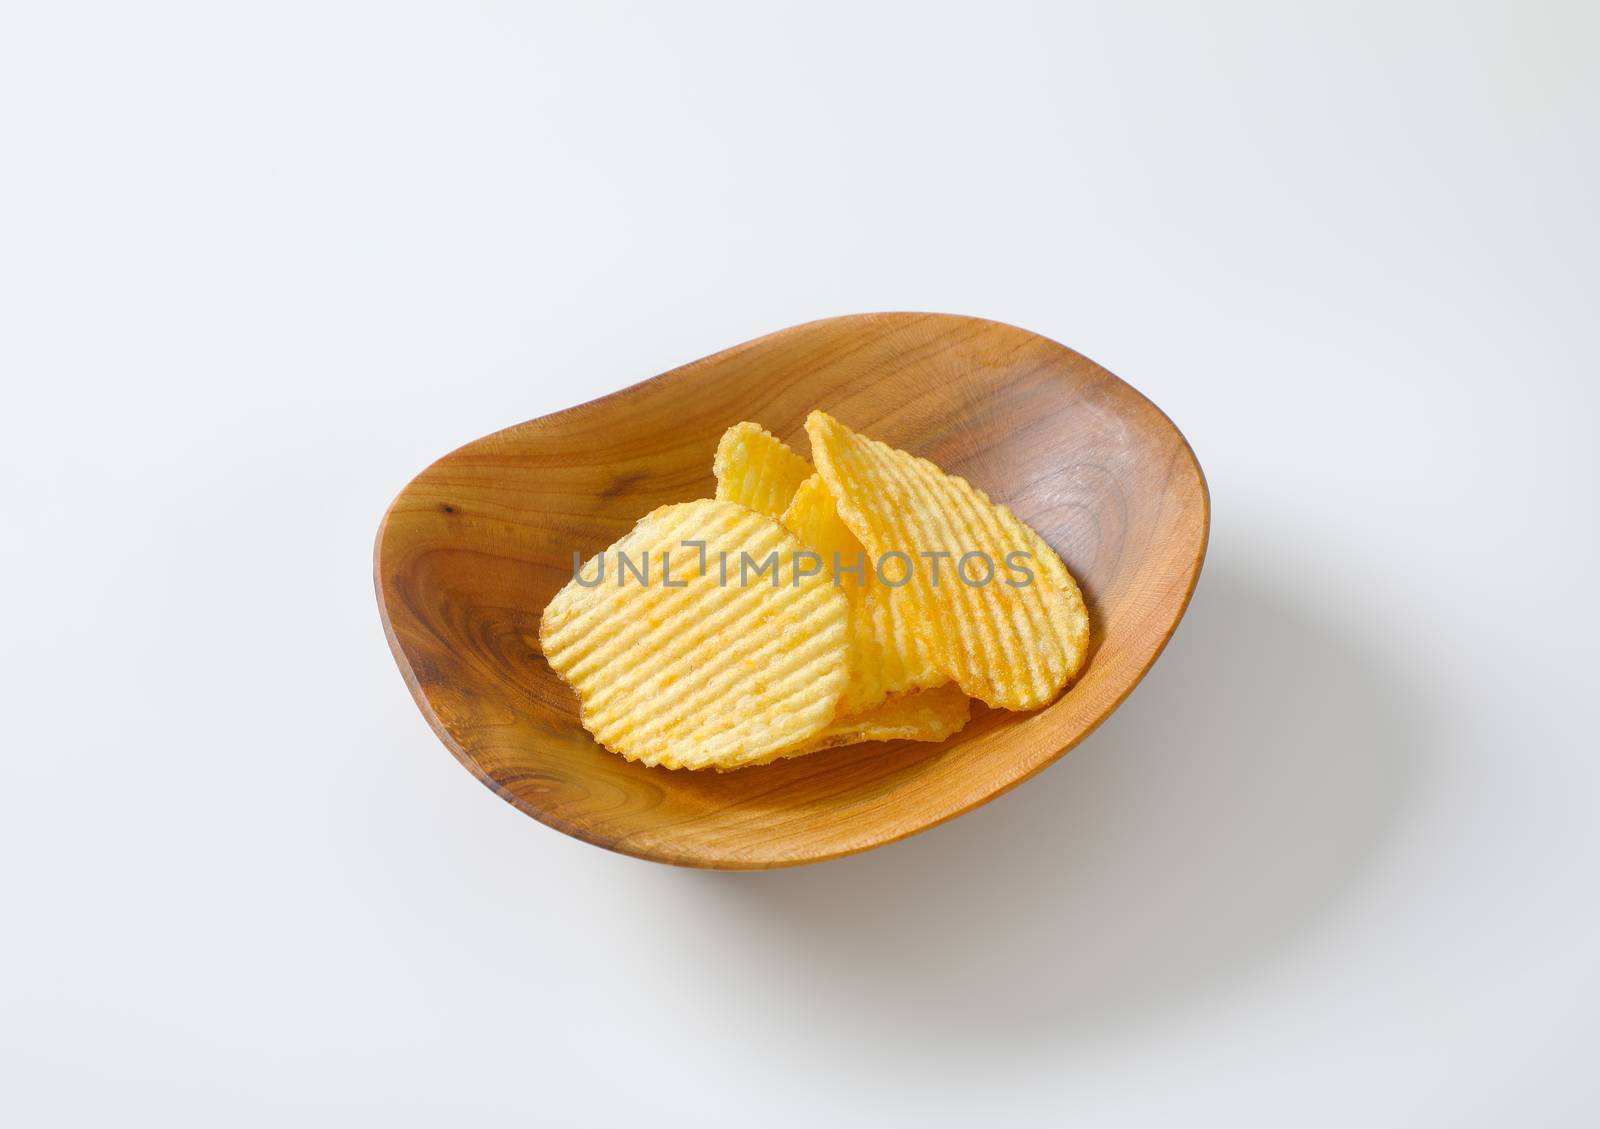 Ridged potato chips by Digifoodstock